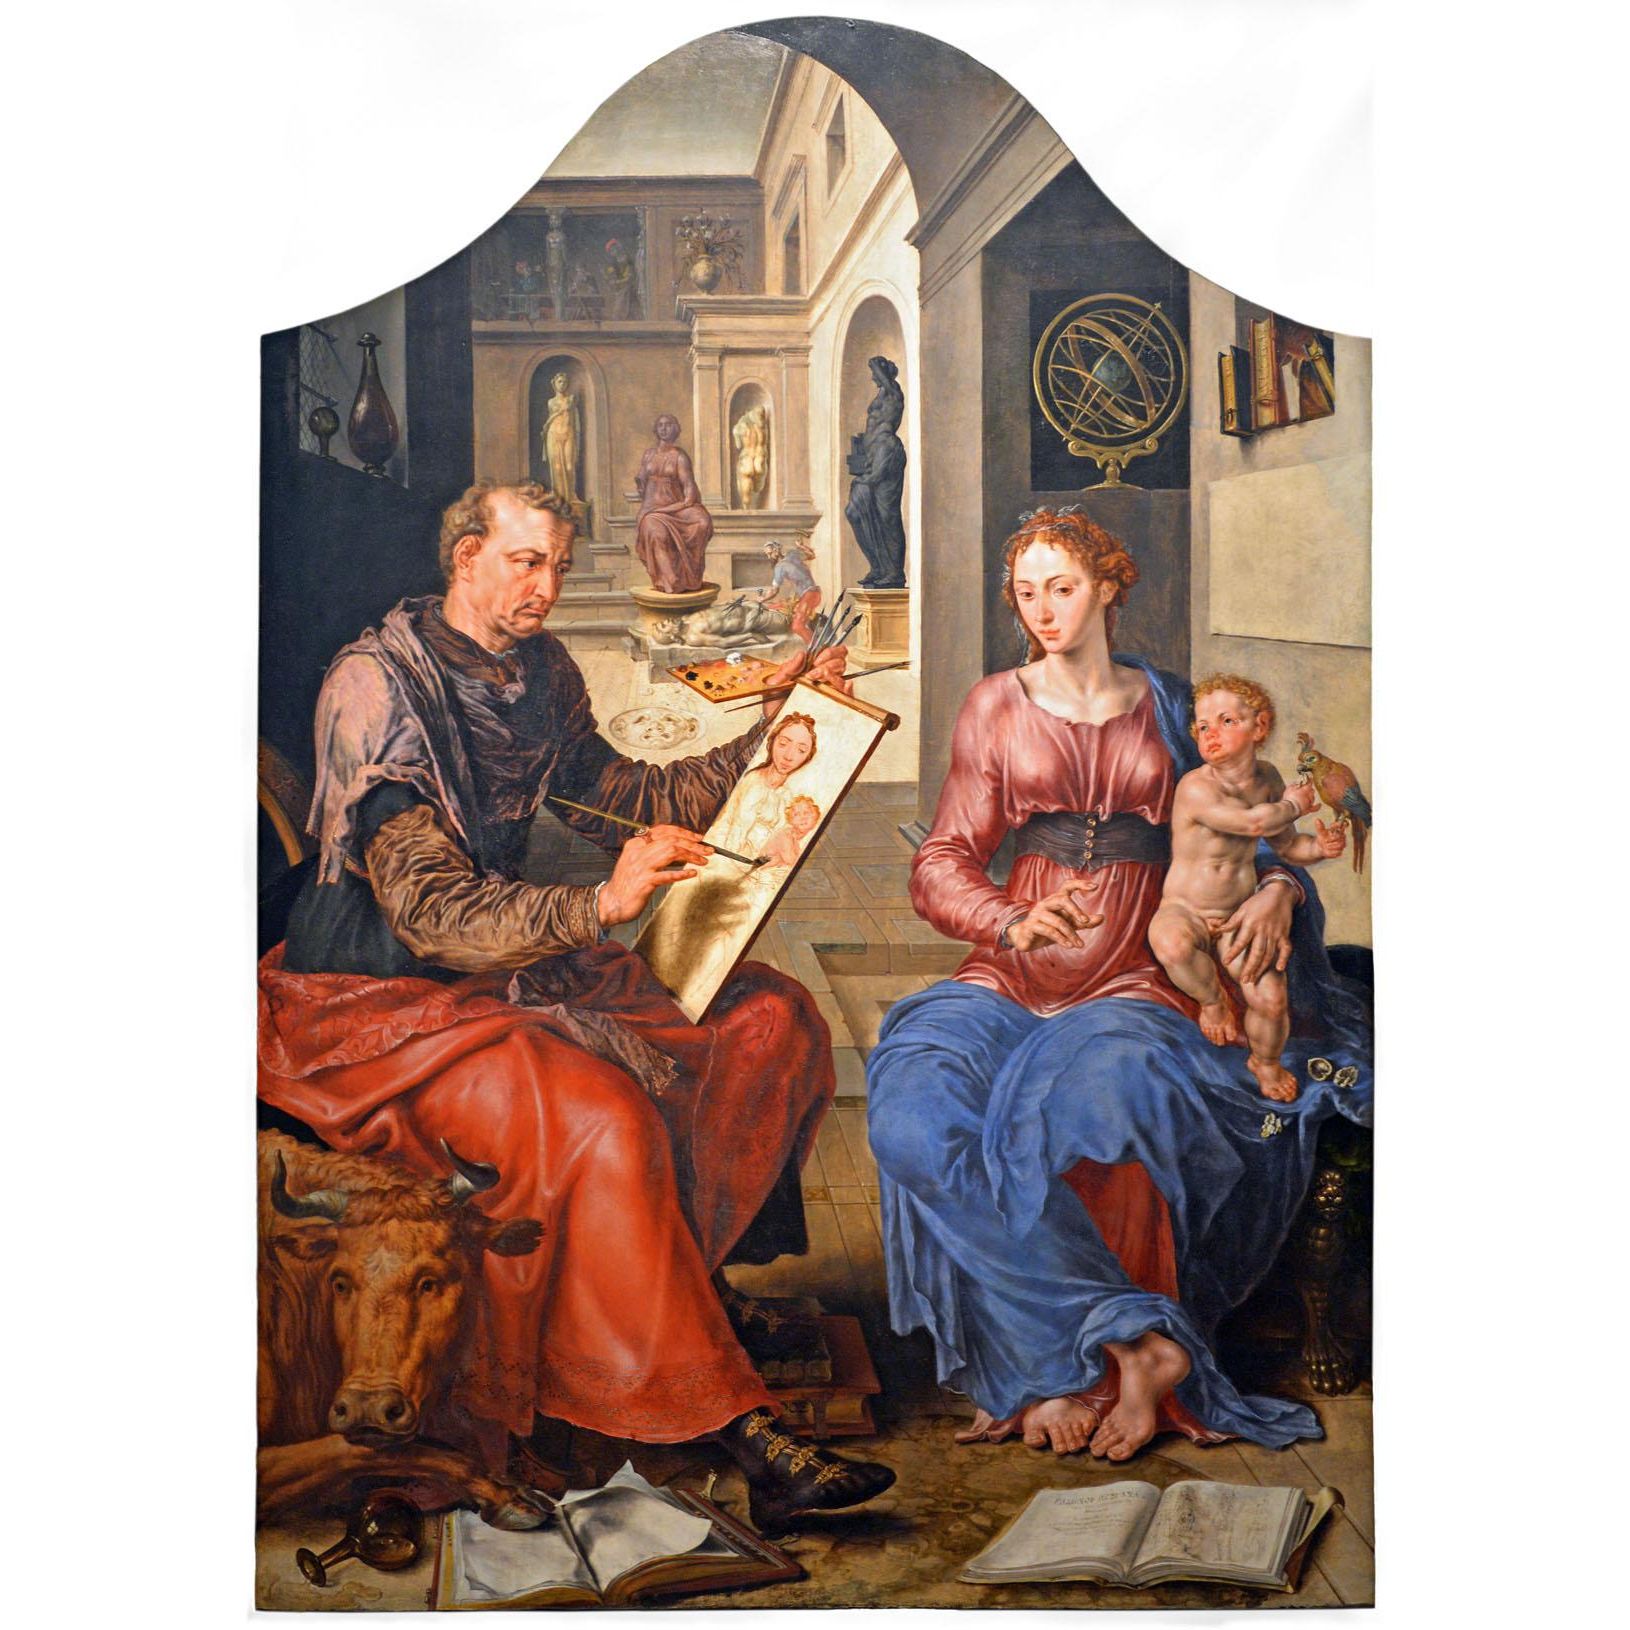 Maarten van Heemskerck. St Luke Painting the Virgin. 1550. MBA Rennes